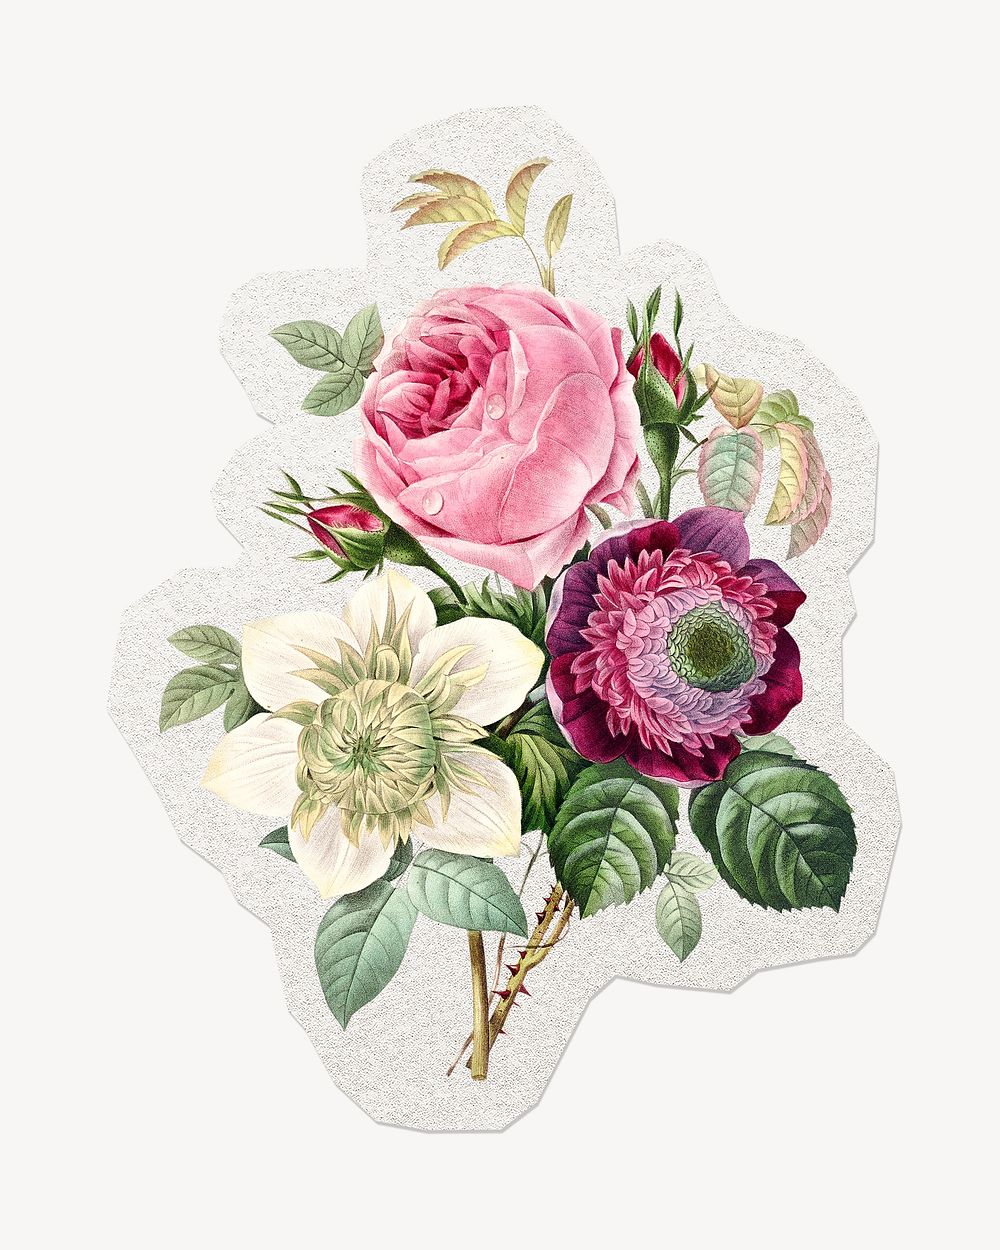 Flower bouquet sticker, watercolor illustration